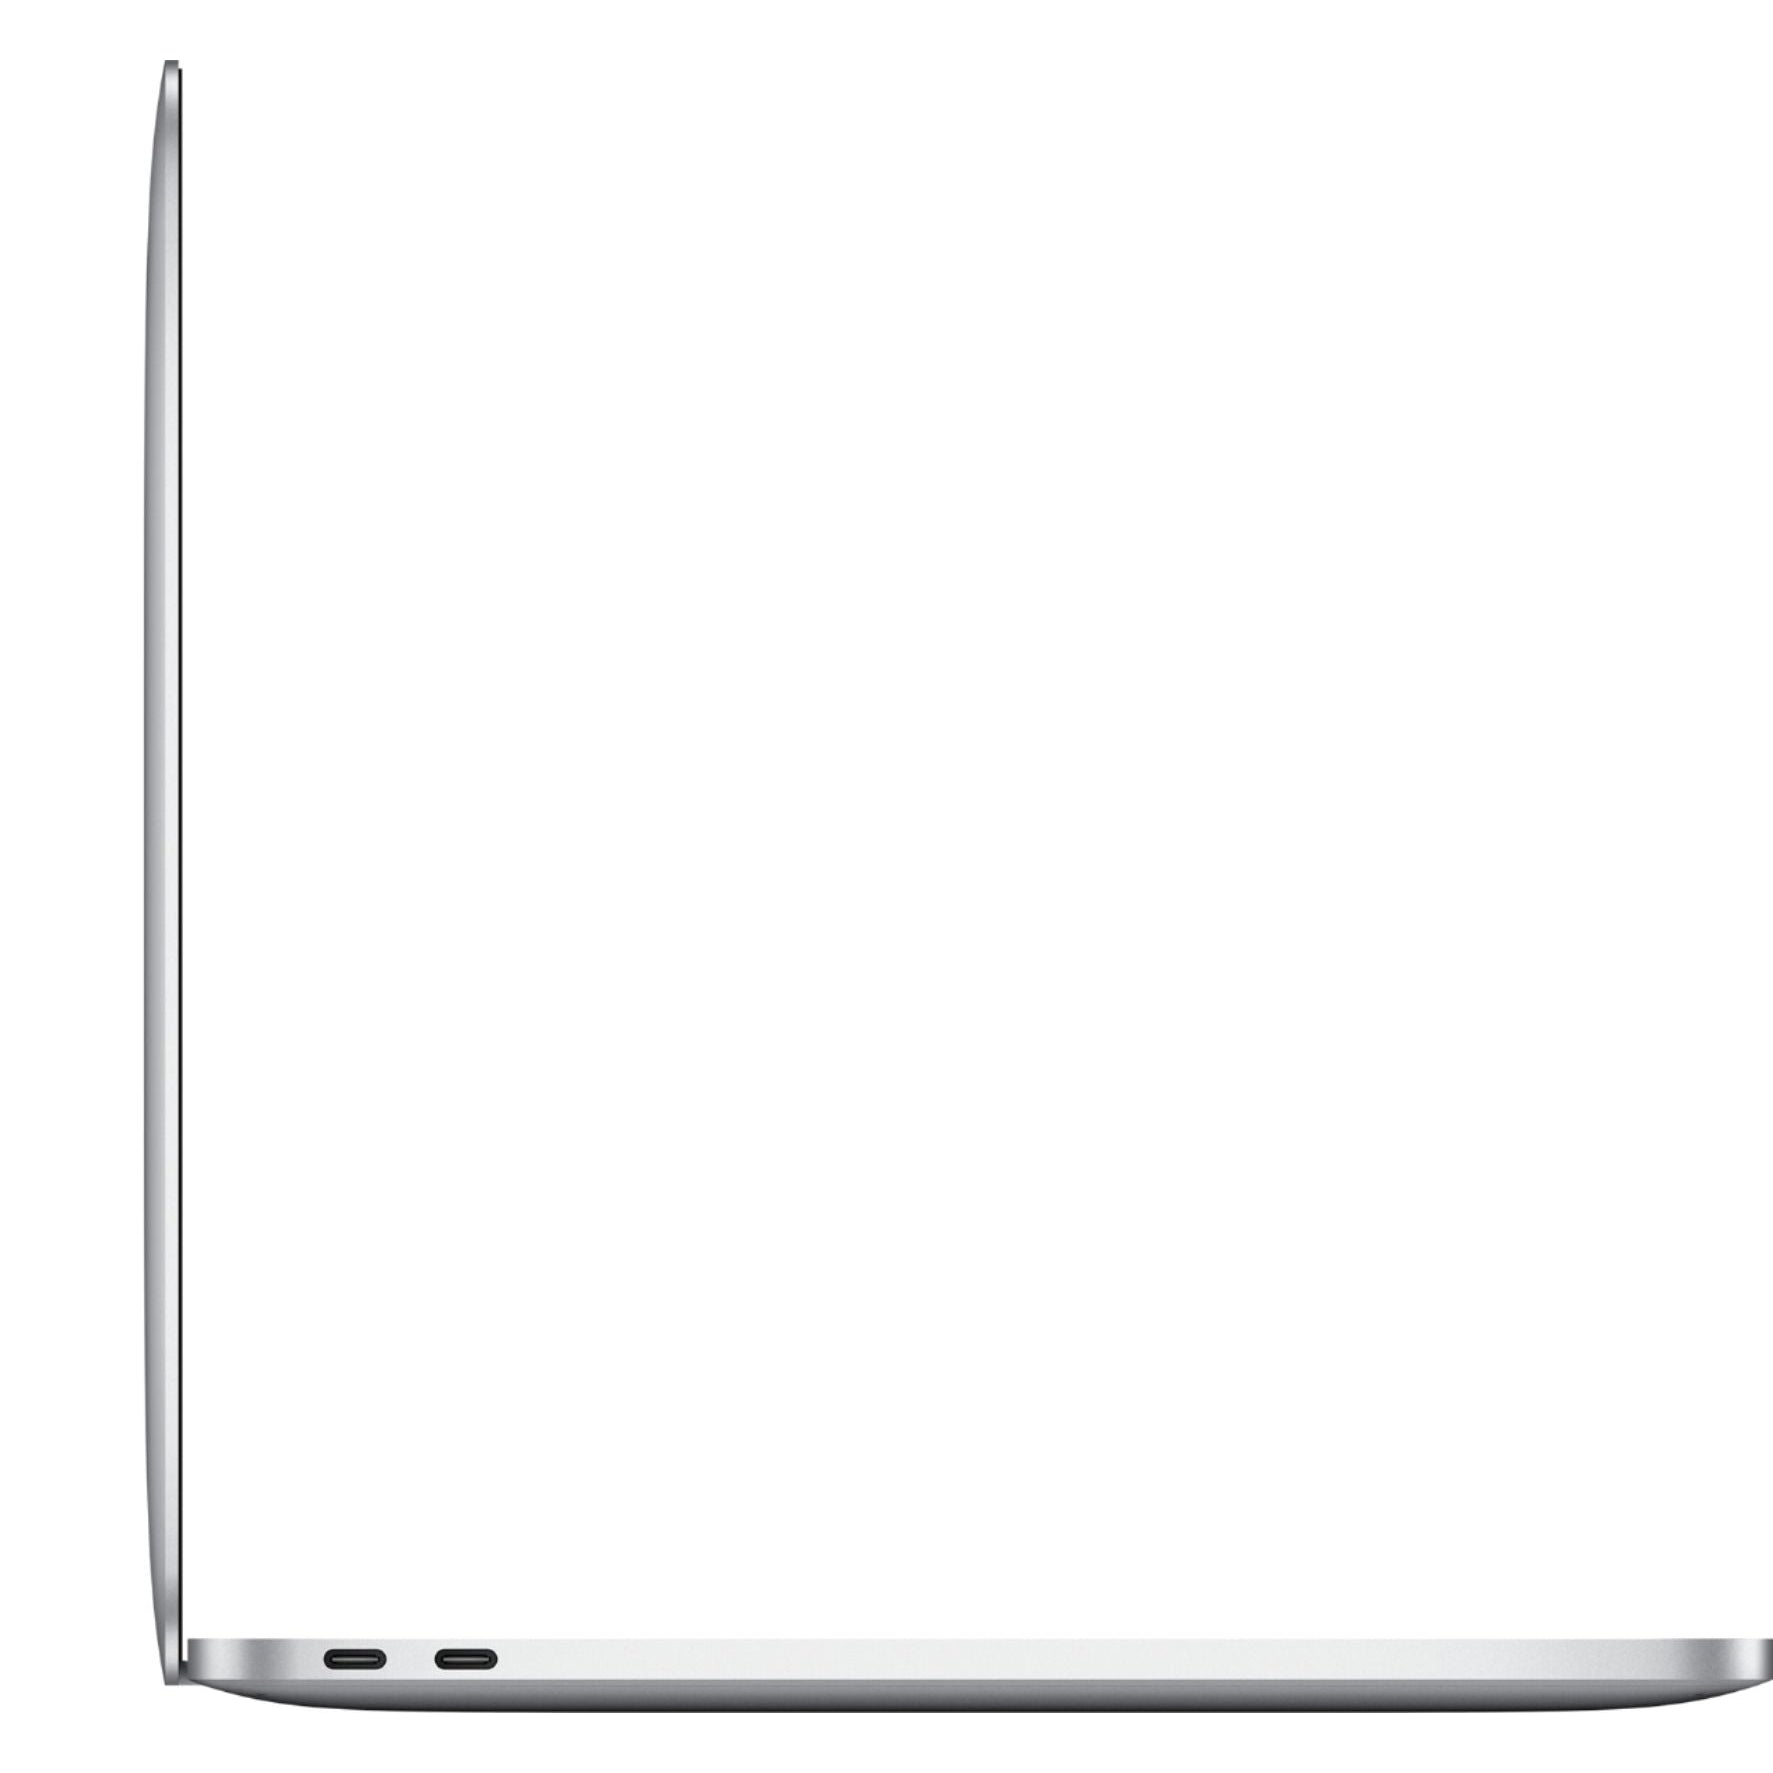 Apple MacBook Pro 13.3'' MV992LL/A (2019) Laptop, Intel Core i5, 8GB RAM, 256GB SSD, Silver with Touch Bar